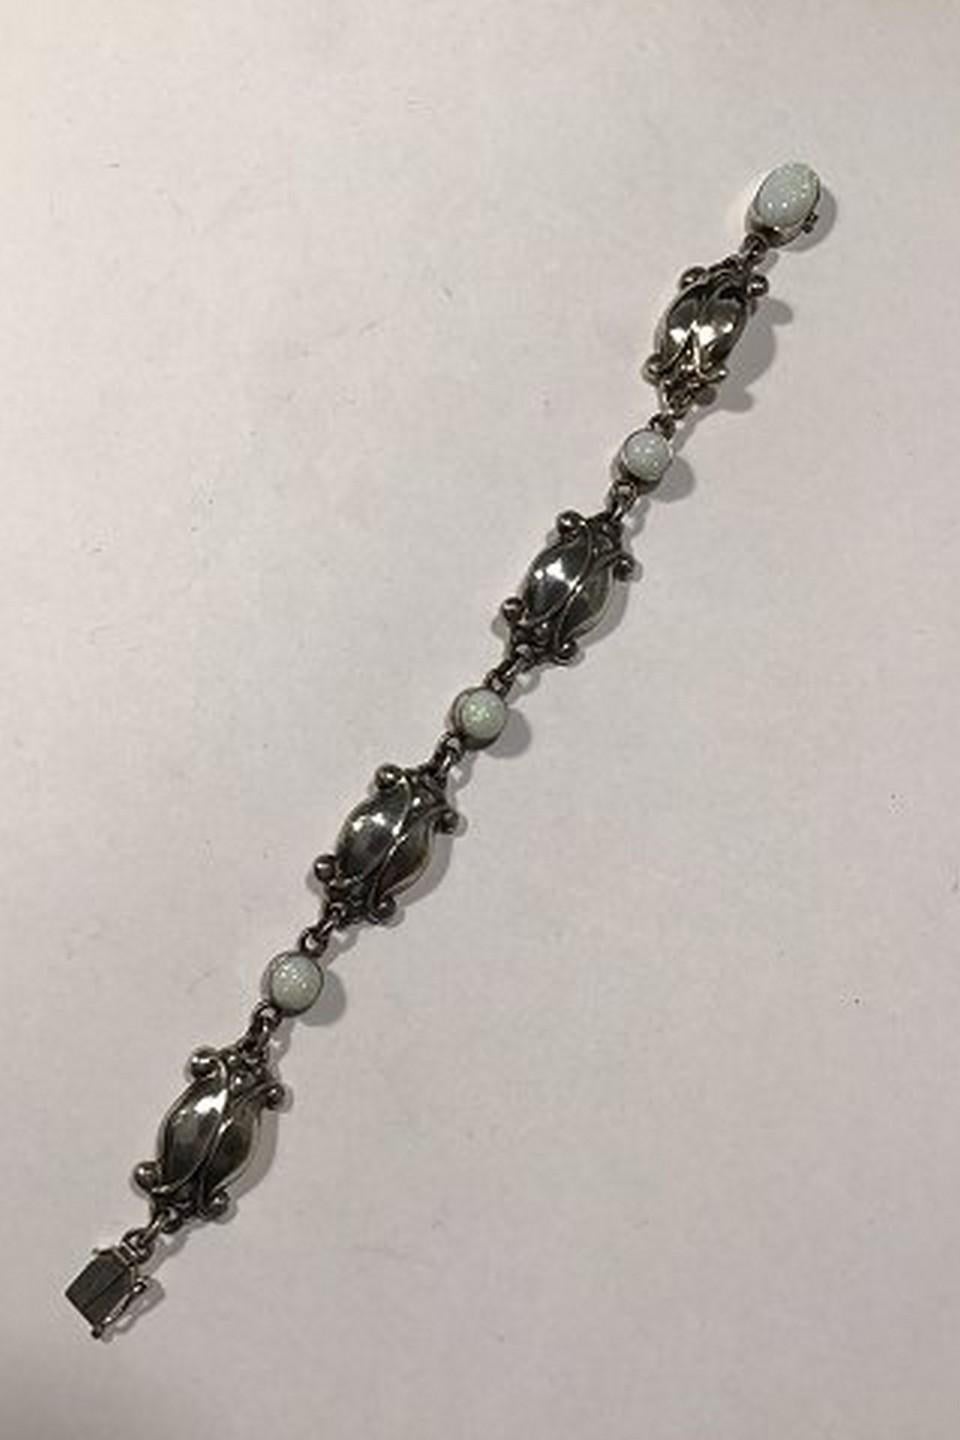 Georg Jensen Sterling Silver Bracelet No 11 Opal Measures 18.5 cm (7 9/32 in) Weight 17.8 gr/0.63 oz
Item no.: 436869